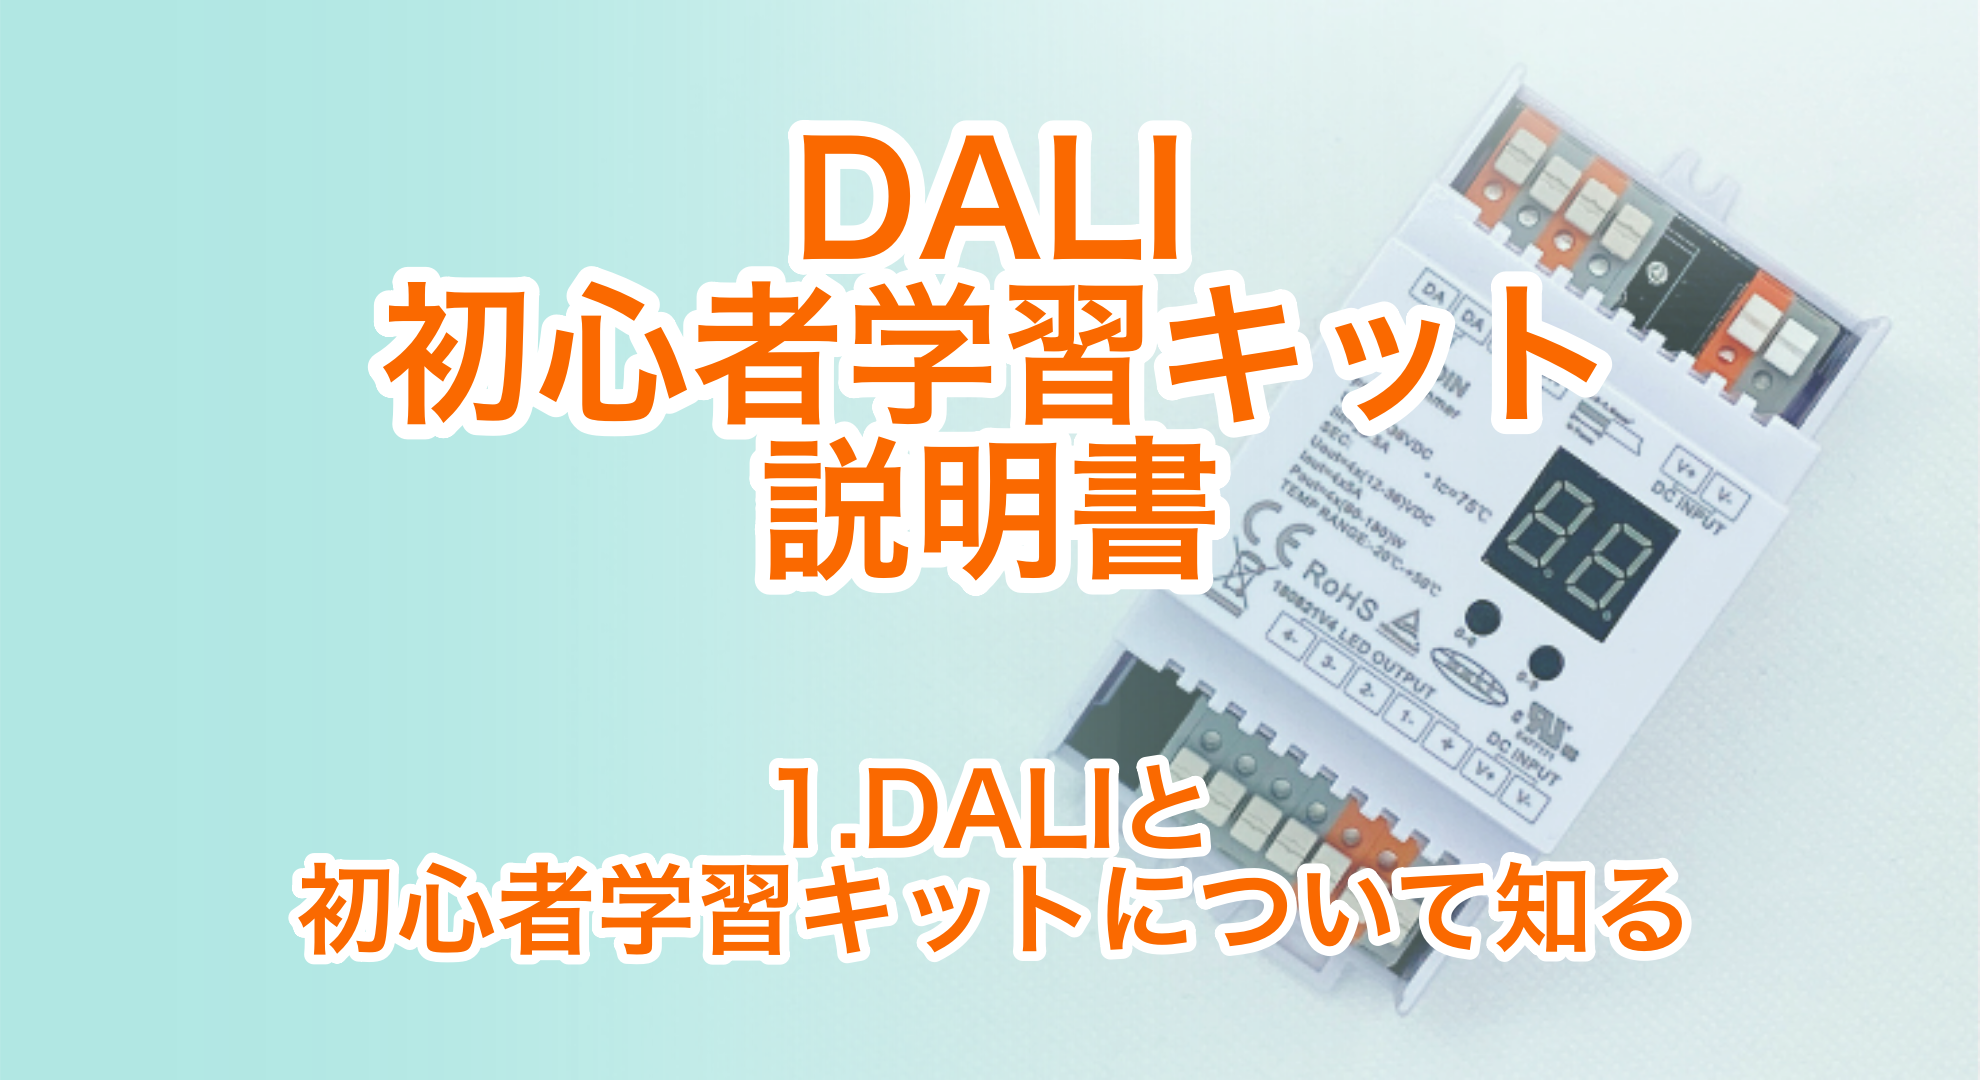 DALI初心者学習キット説明書　1.DALIと初心者学習キットについて知る